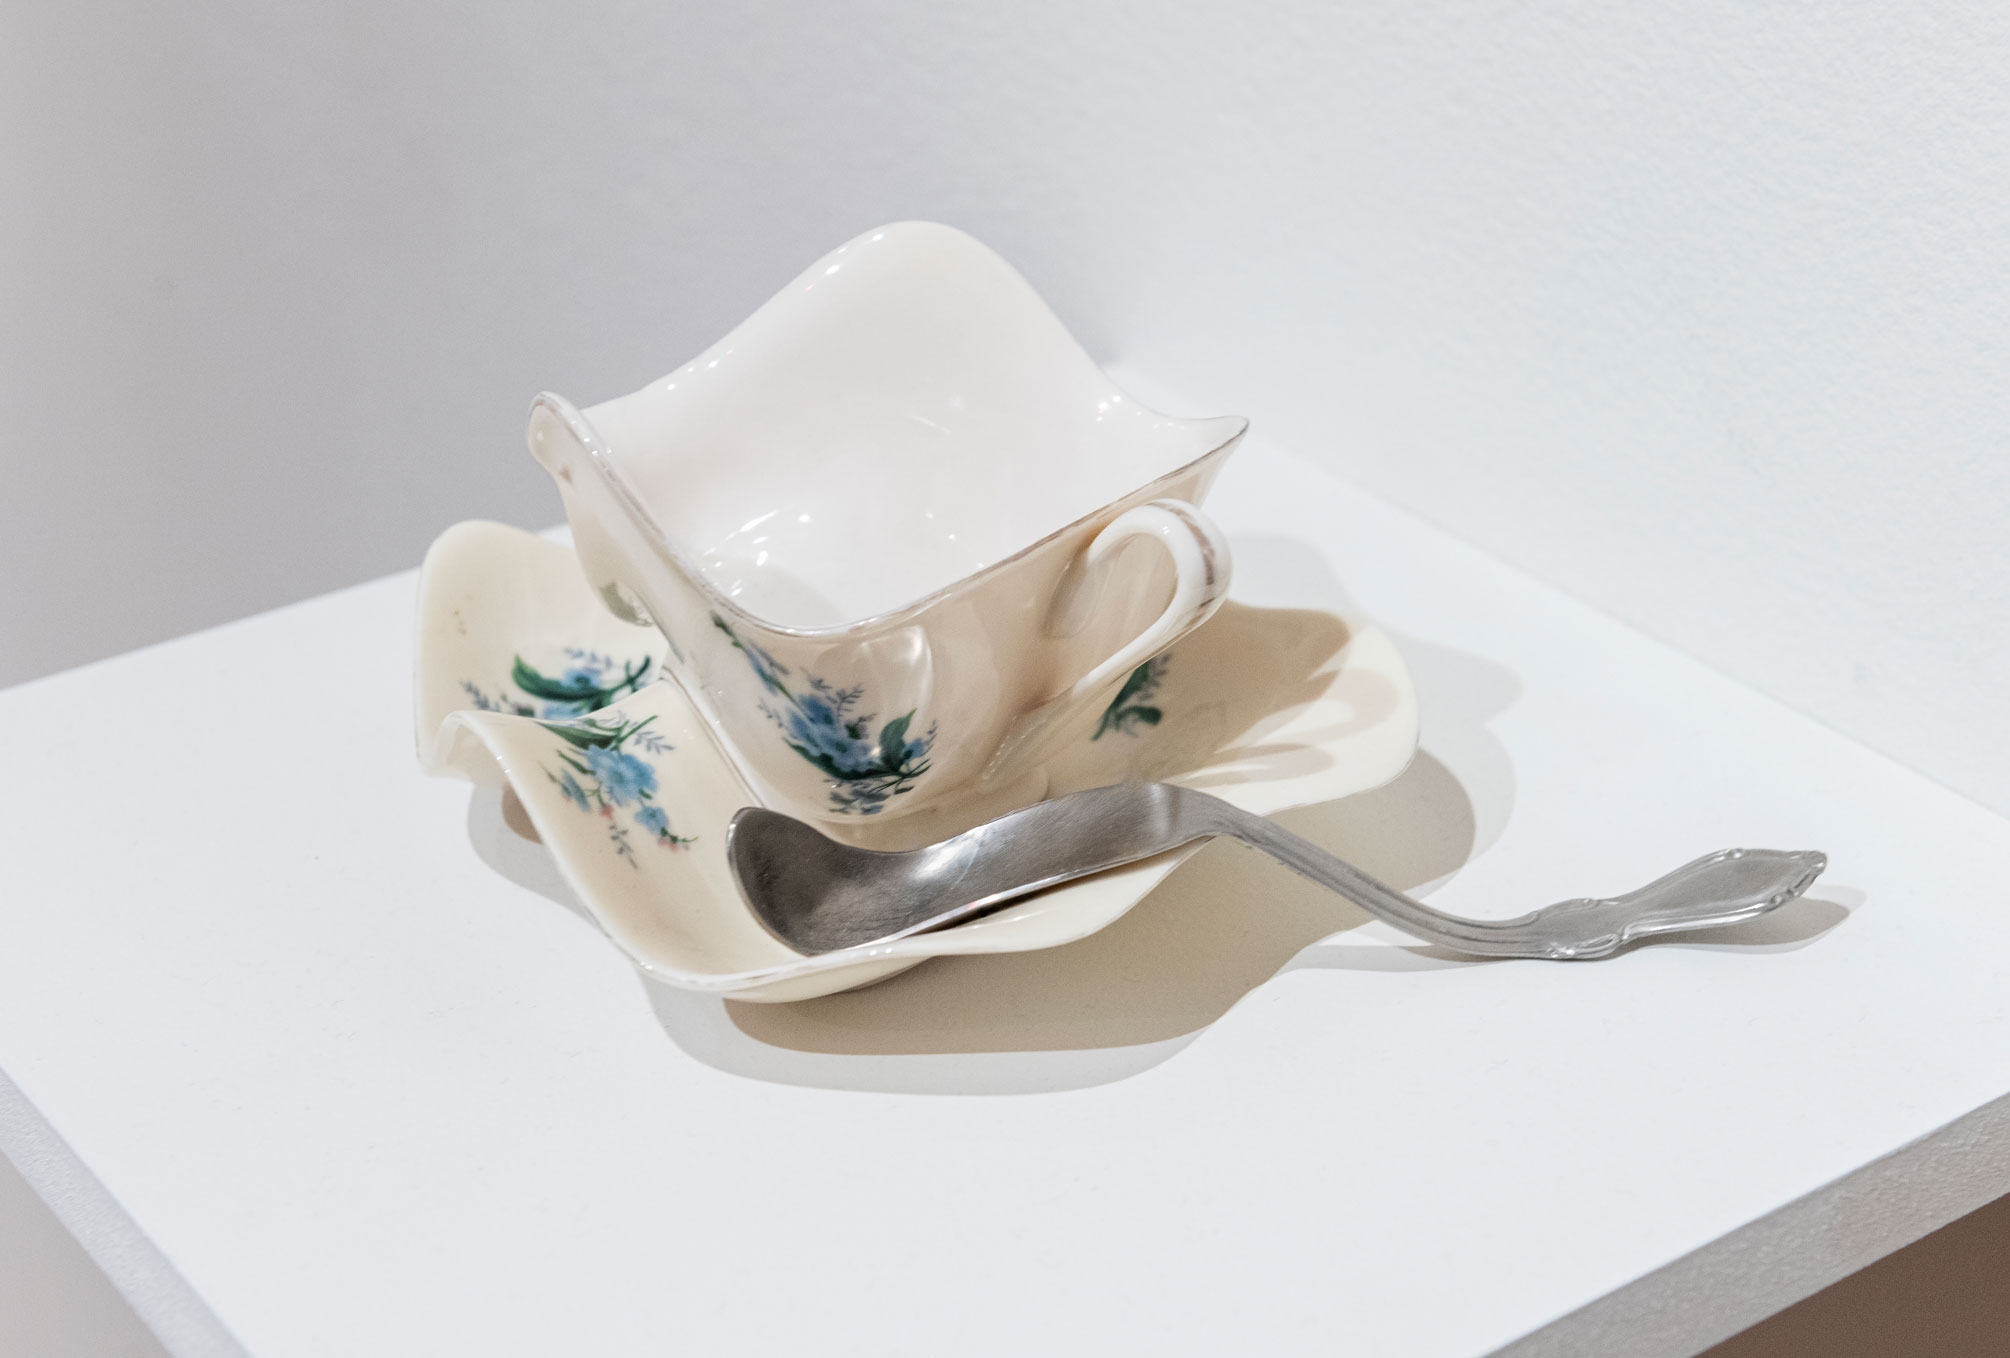 warped teacup by Robert Lazarrini